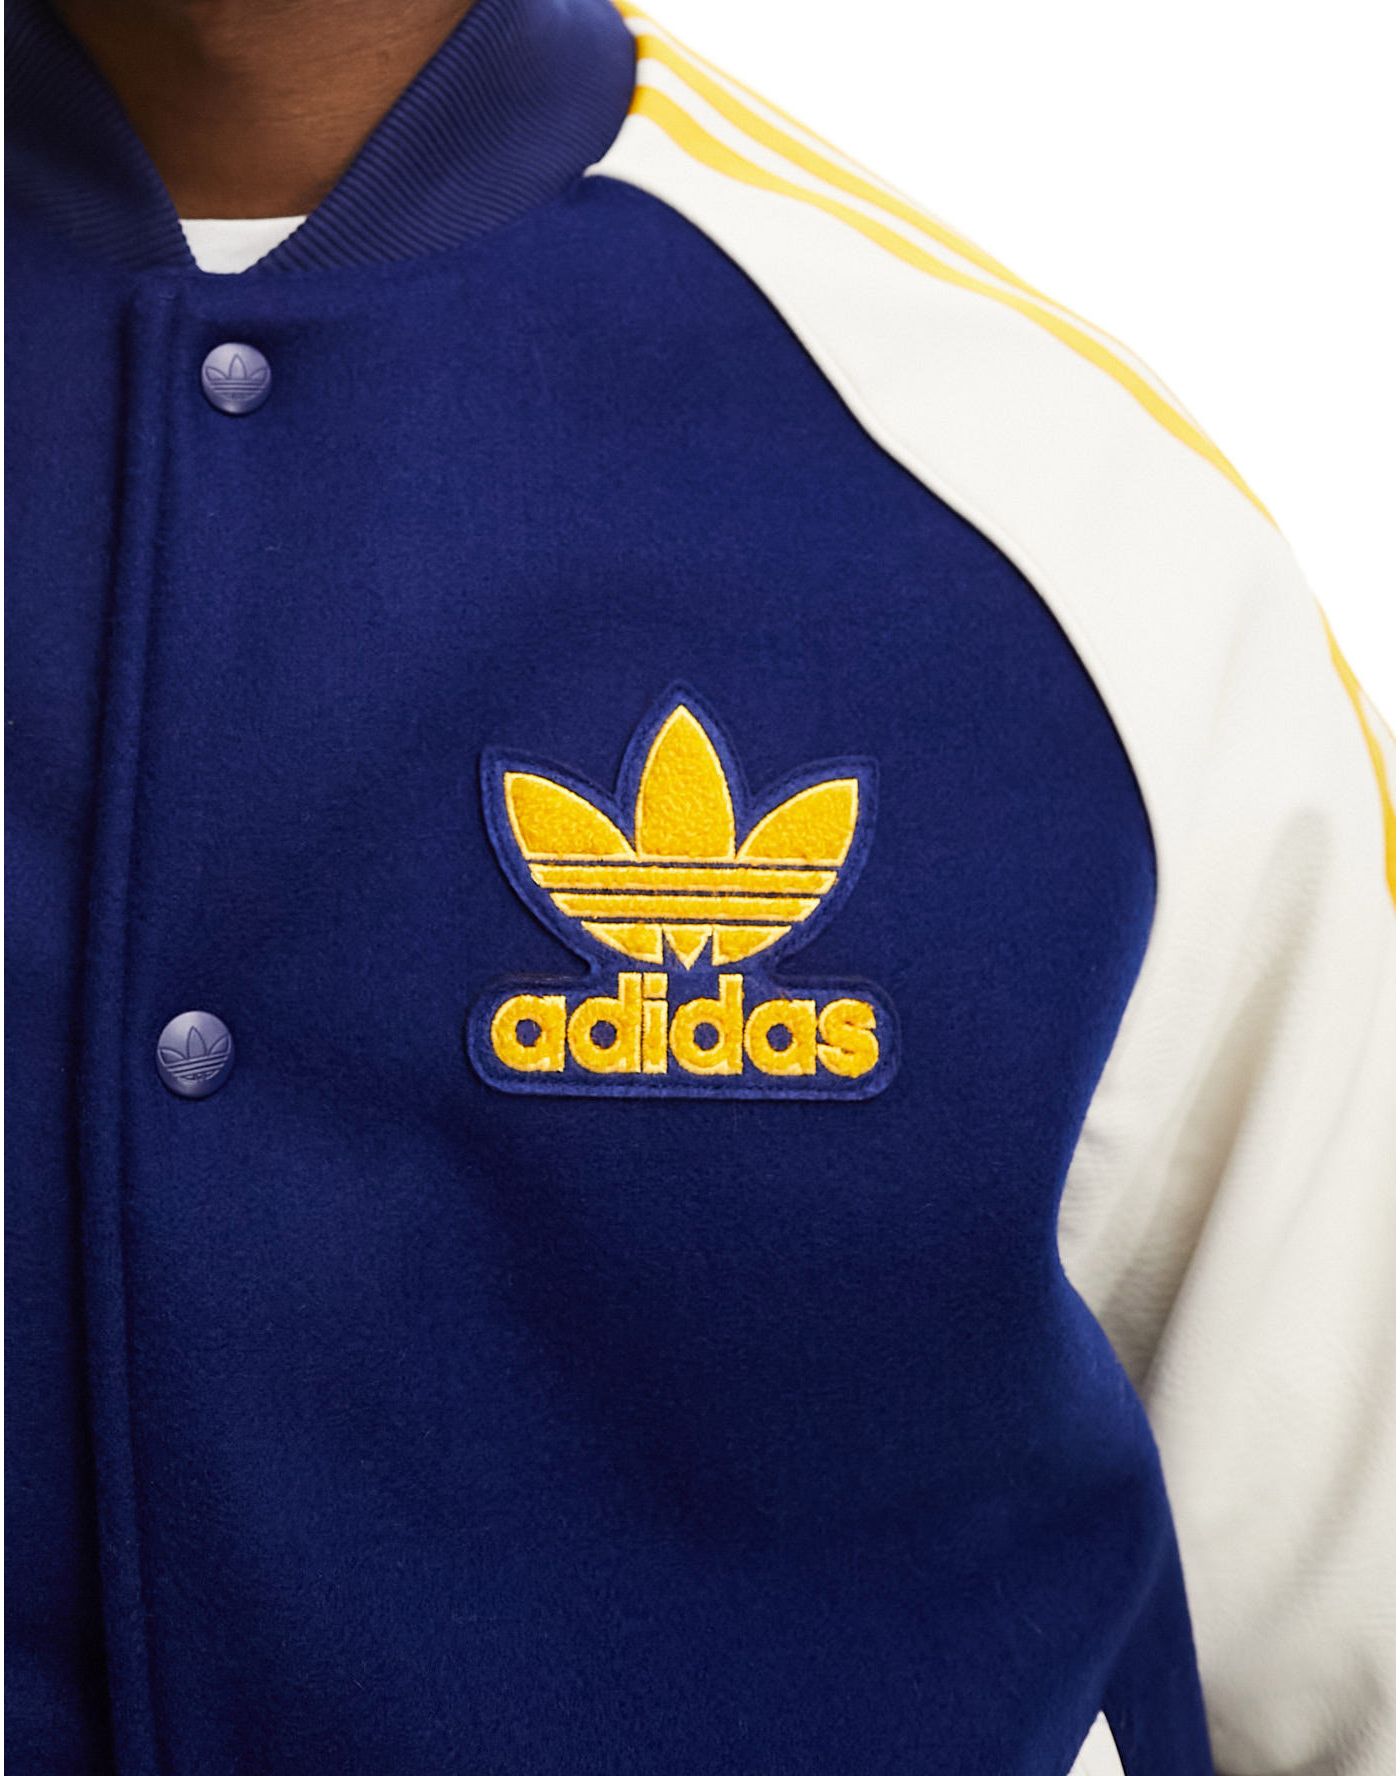 adidas Originals Superstar collegiate varsity jacket in navy and white